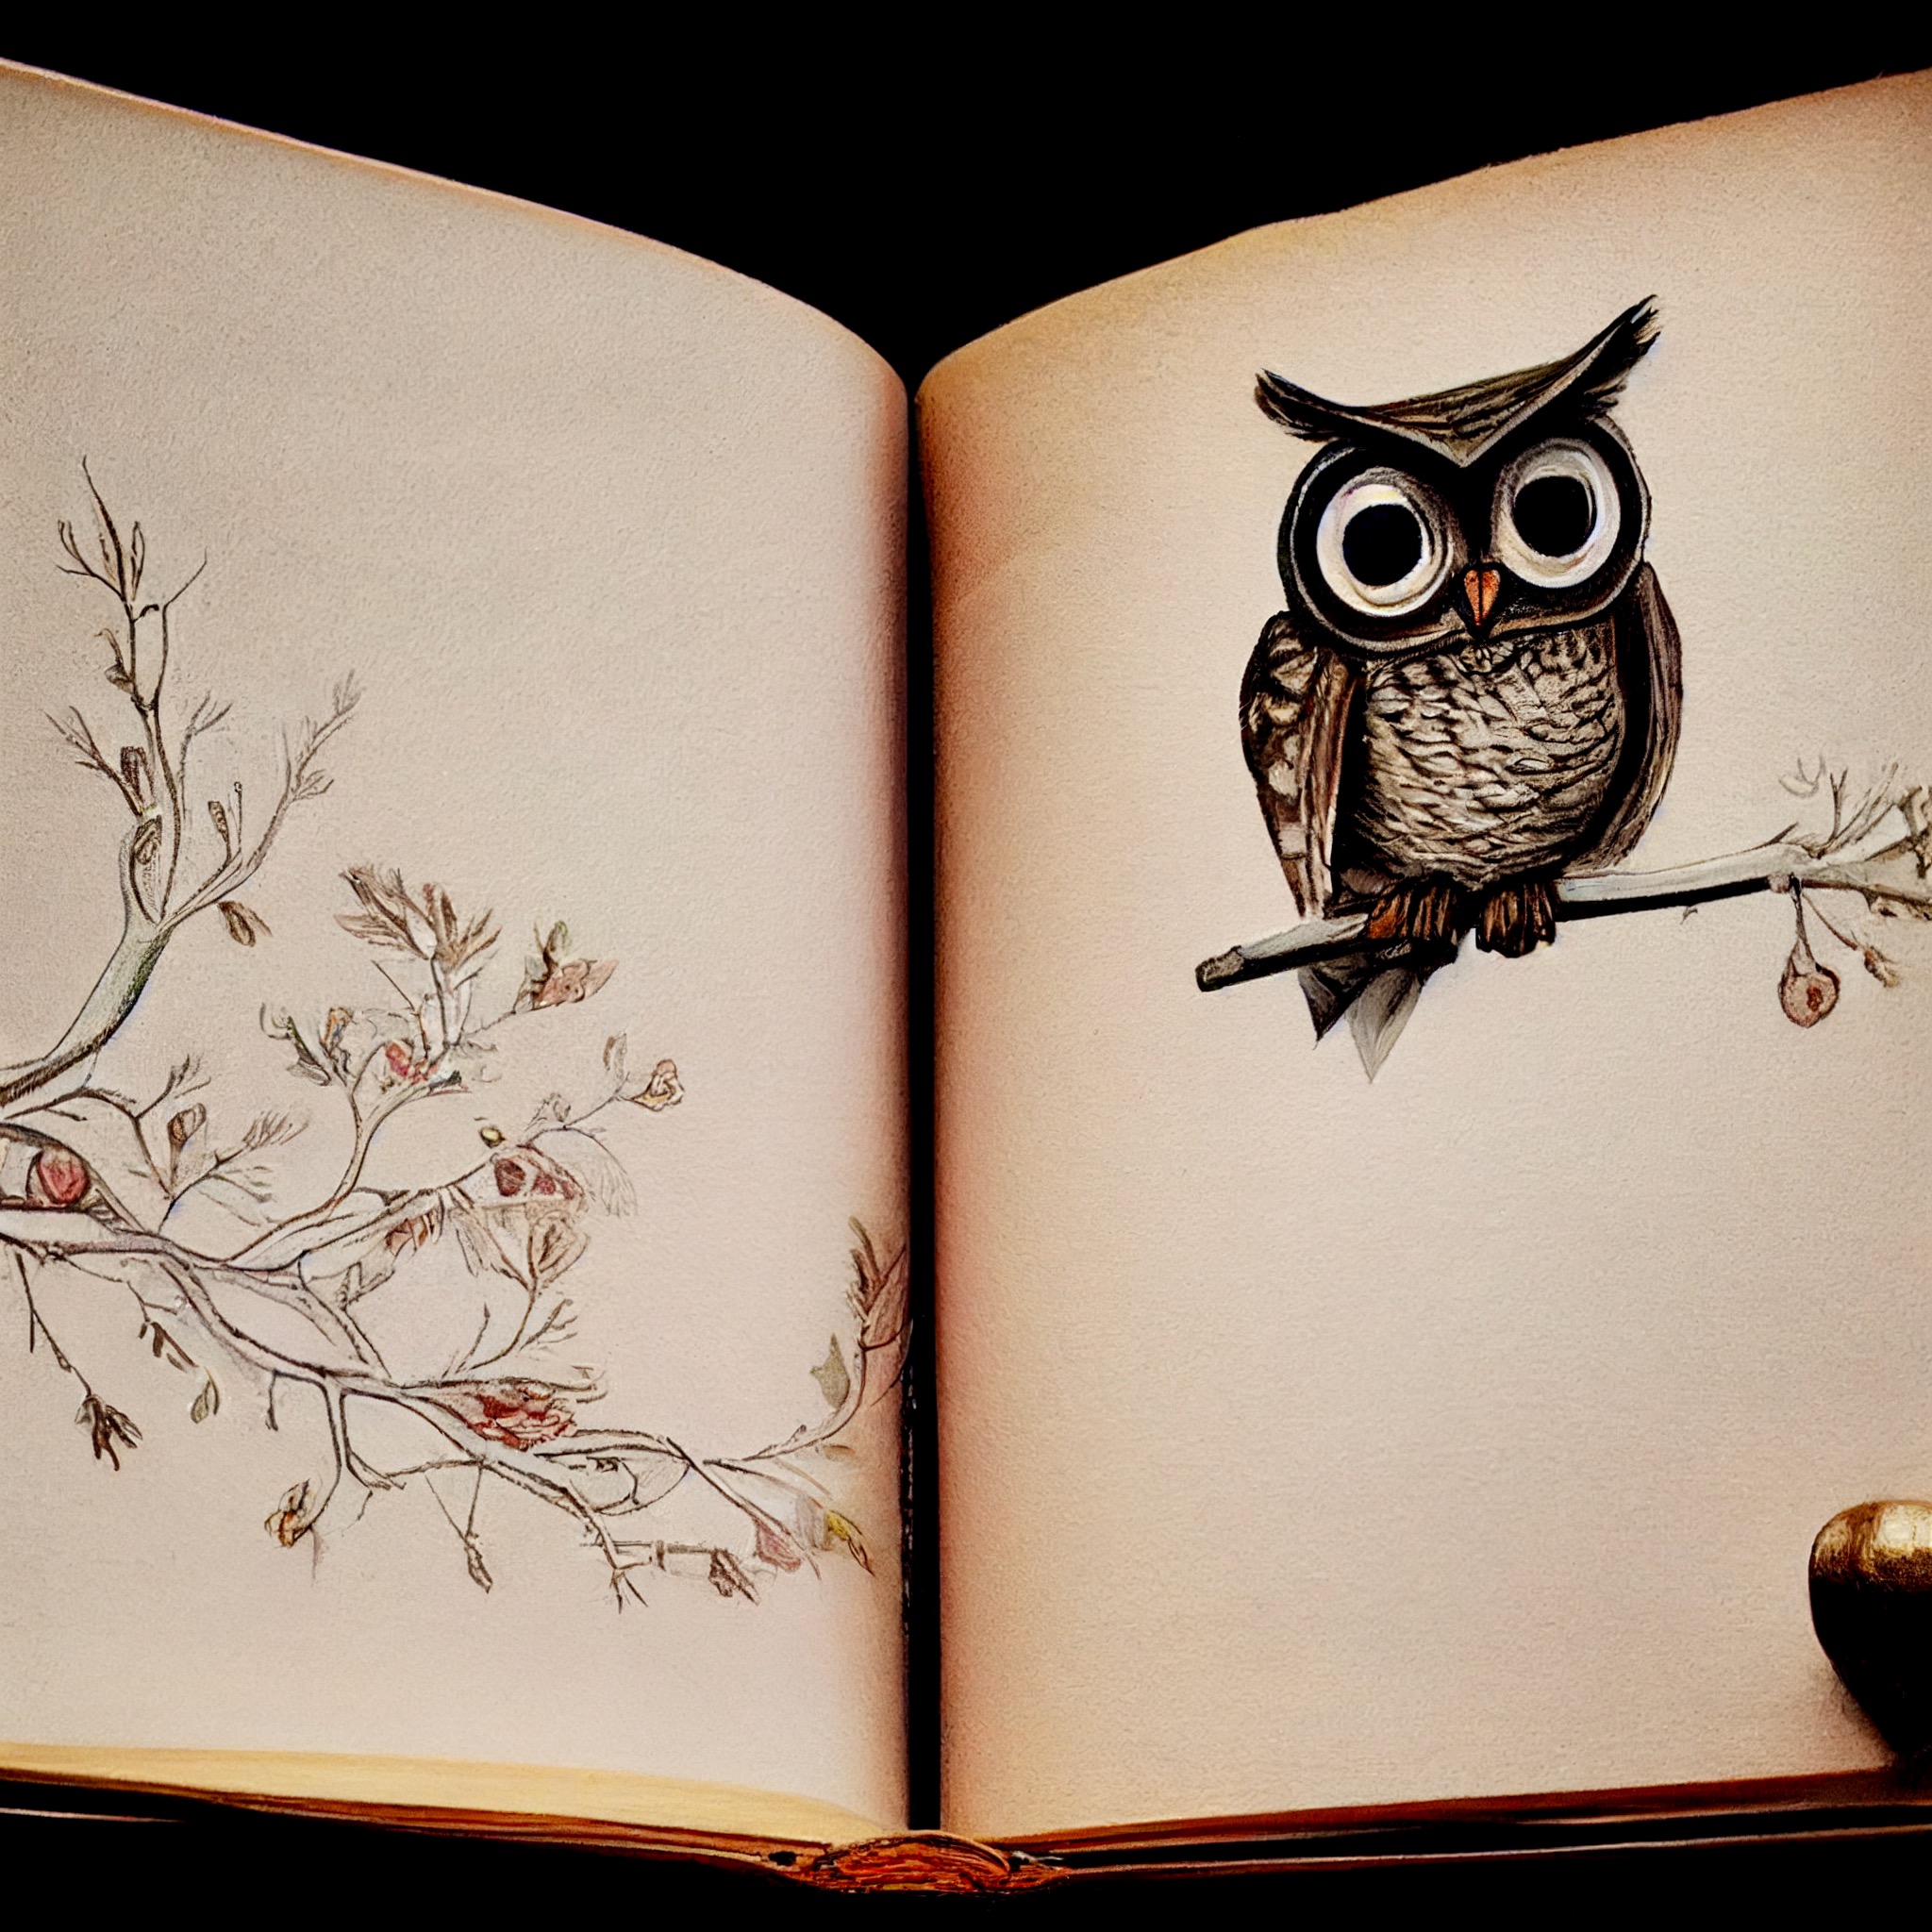 Prinz Rupi book owl greets from Berlin glamorous dd6ec598 b950 4266 bf7e 7762f2cb32c9